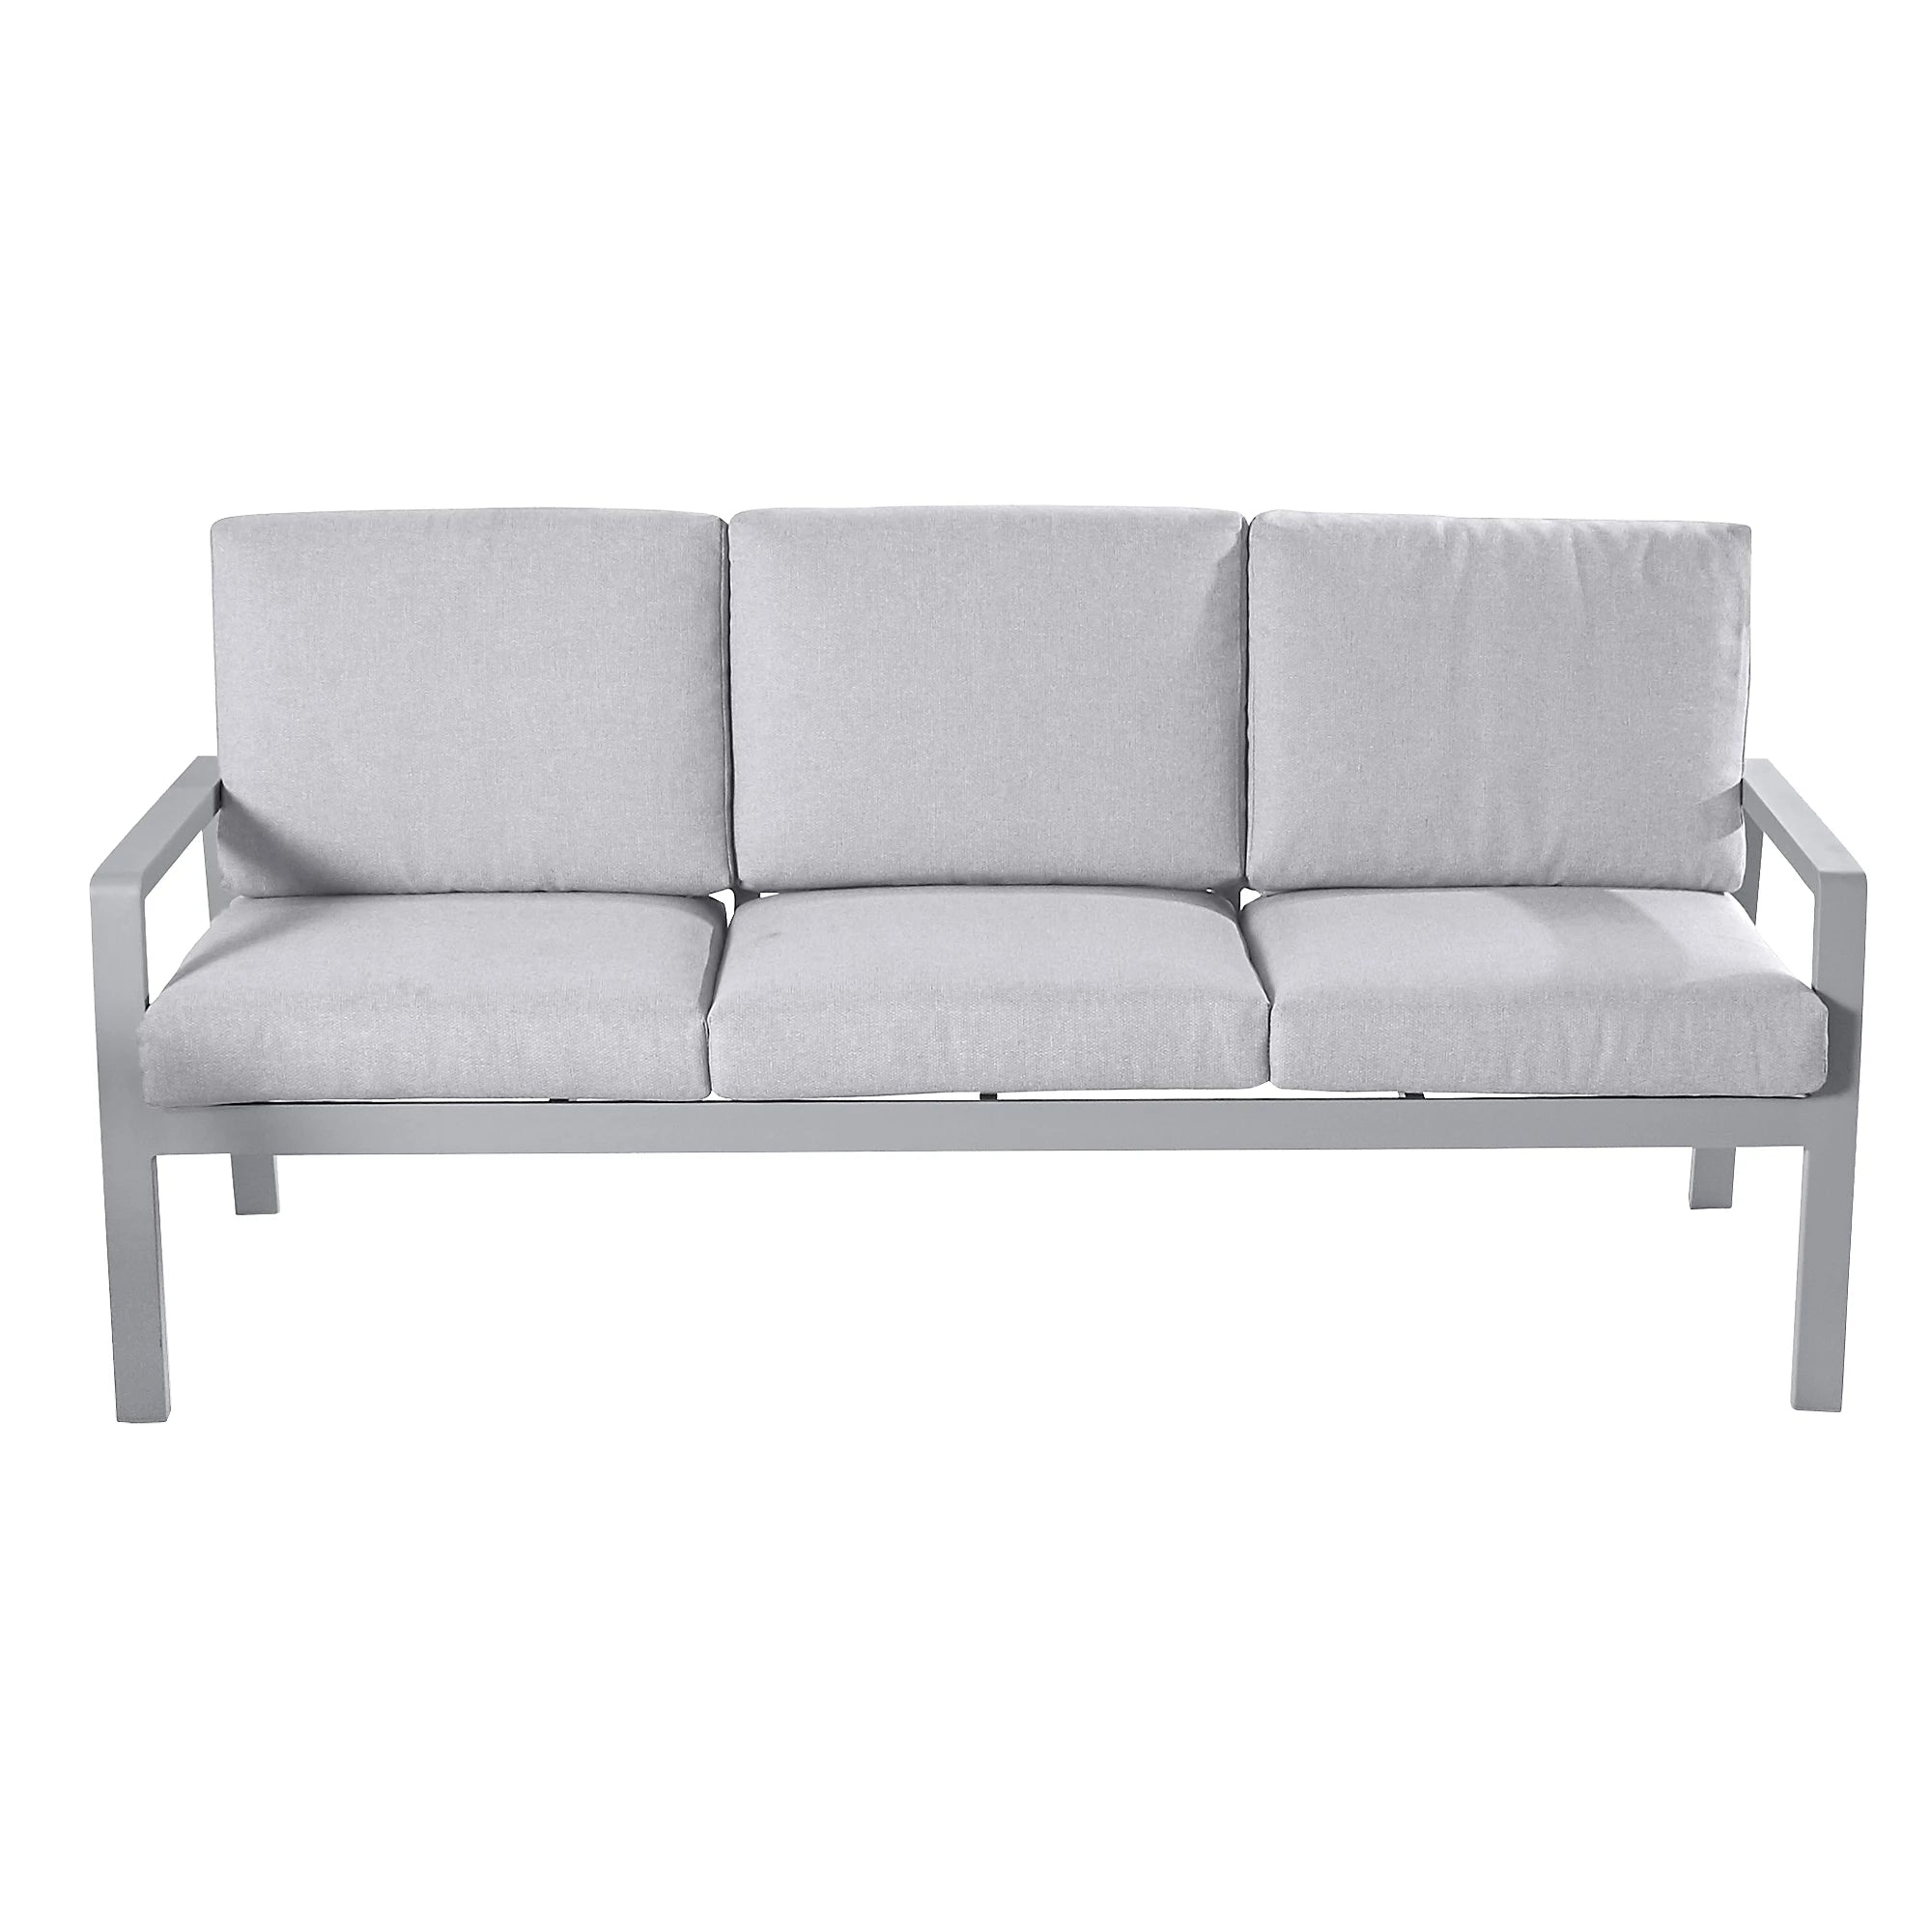 GoodHome Moorea Steel grey Metal 5 Seater Coffee set - Garden Furniture 2732